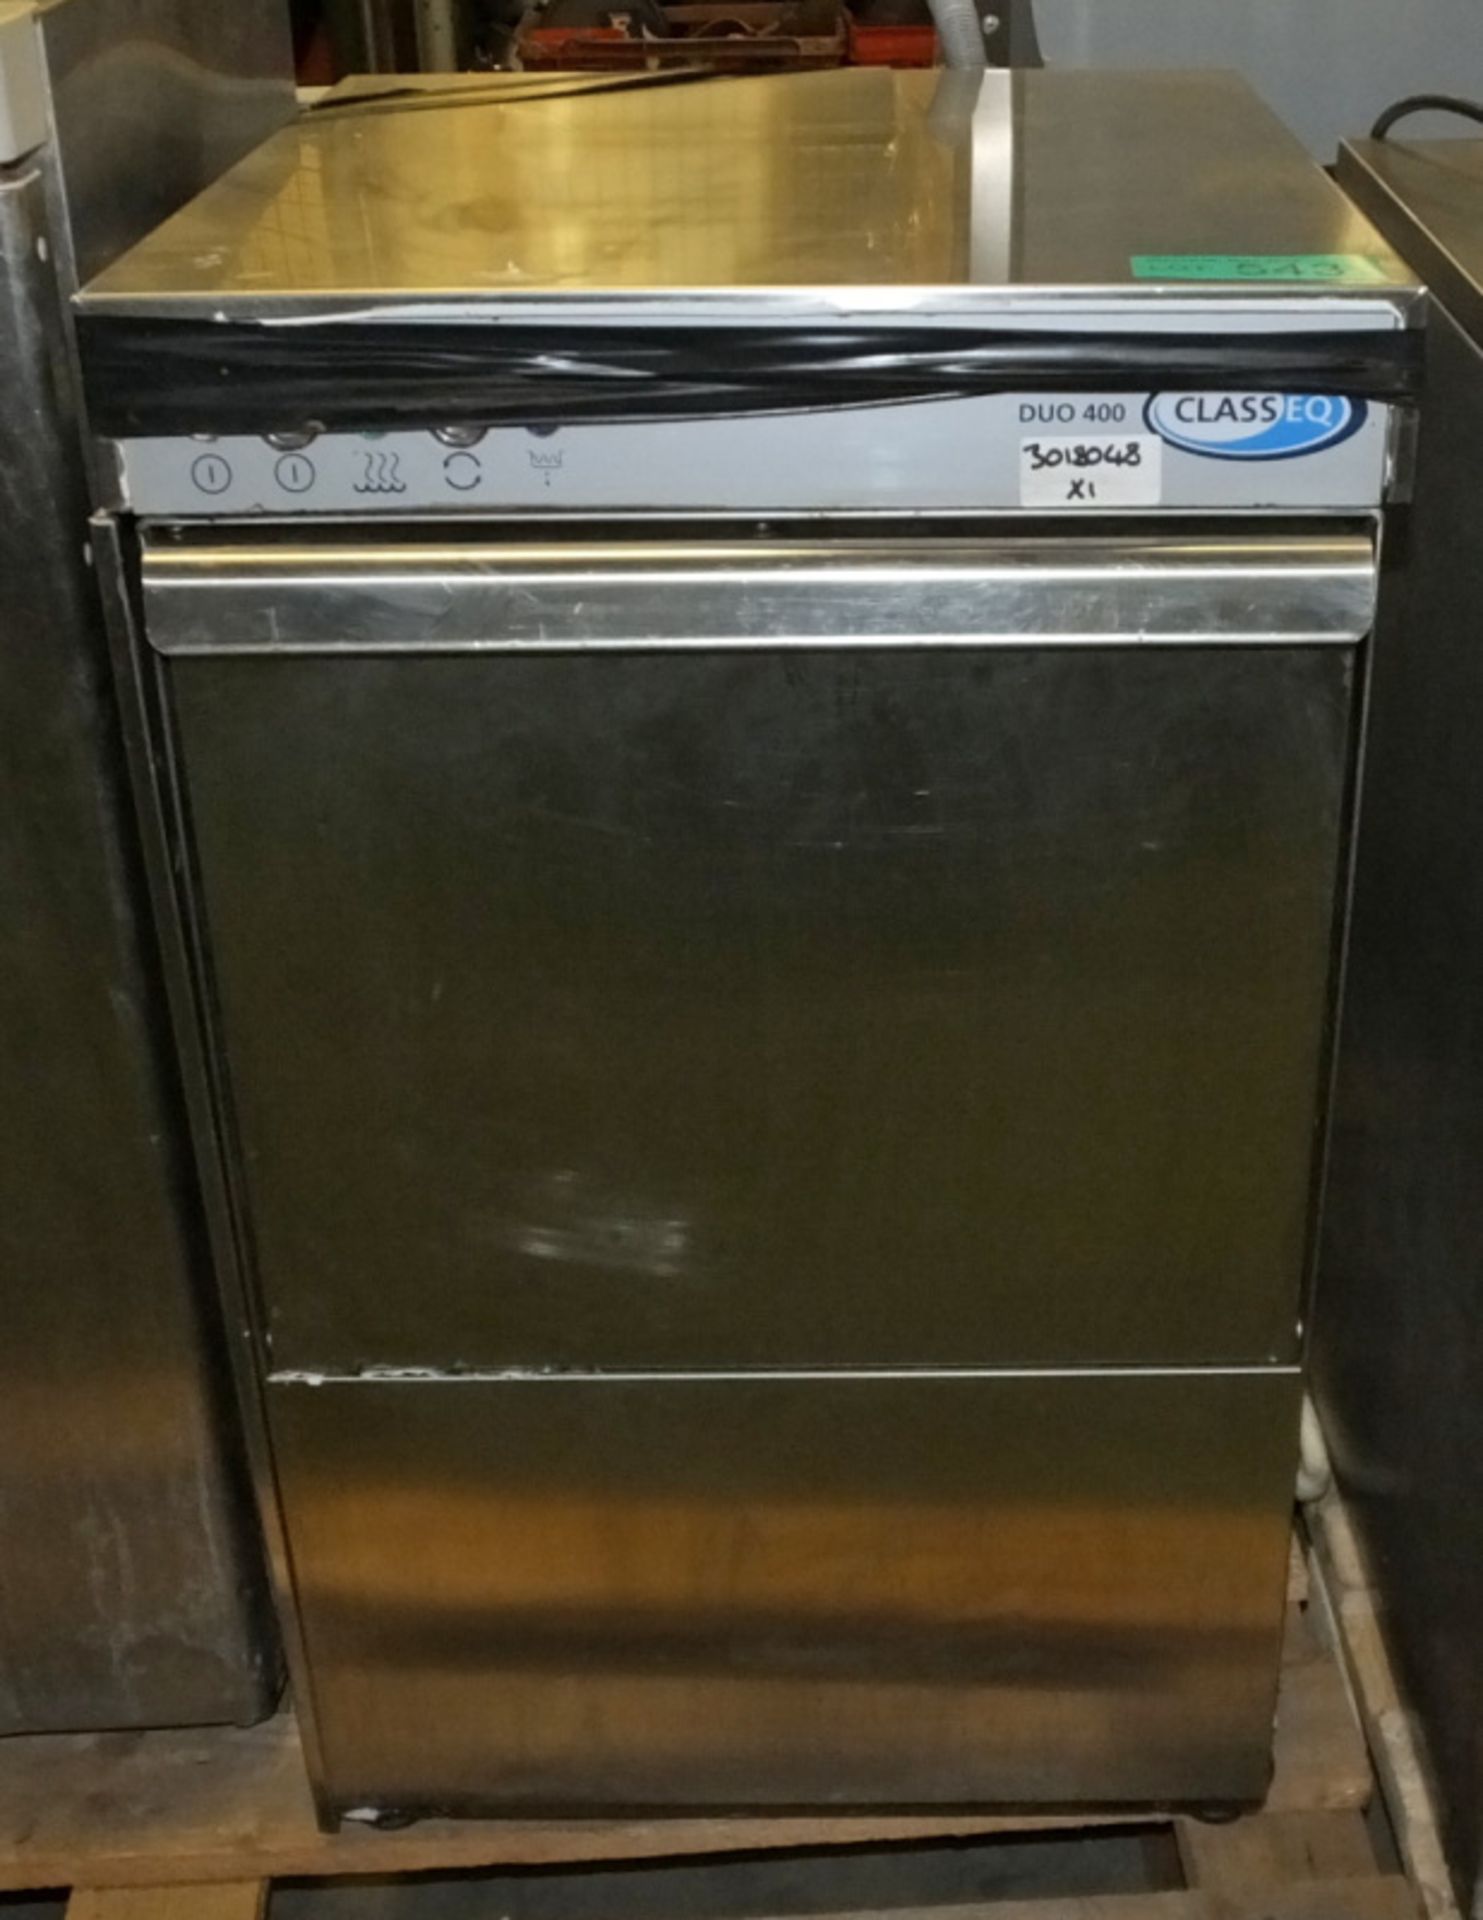 Classeq Duo 400 dishwasher L 47 x W 53 x H 75cm